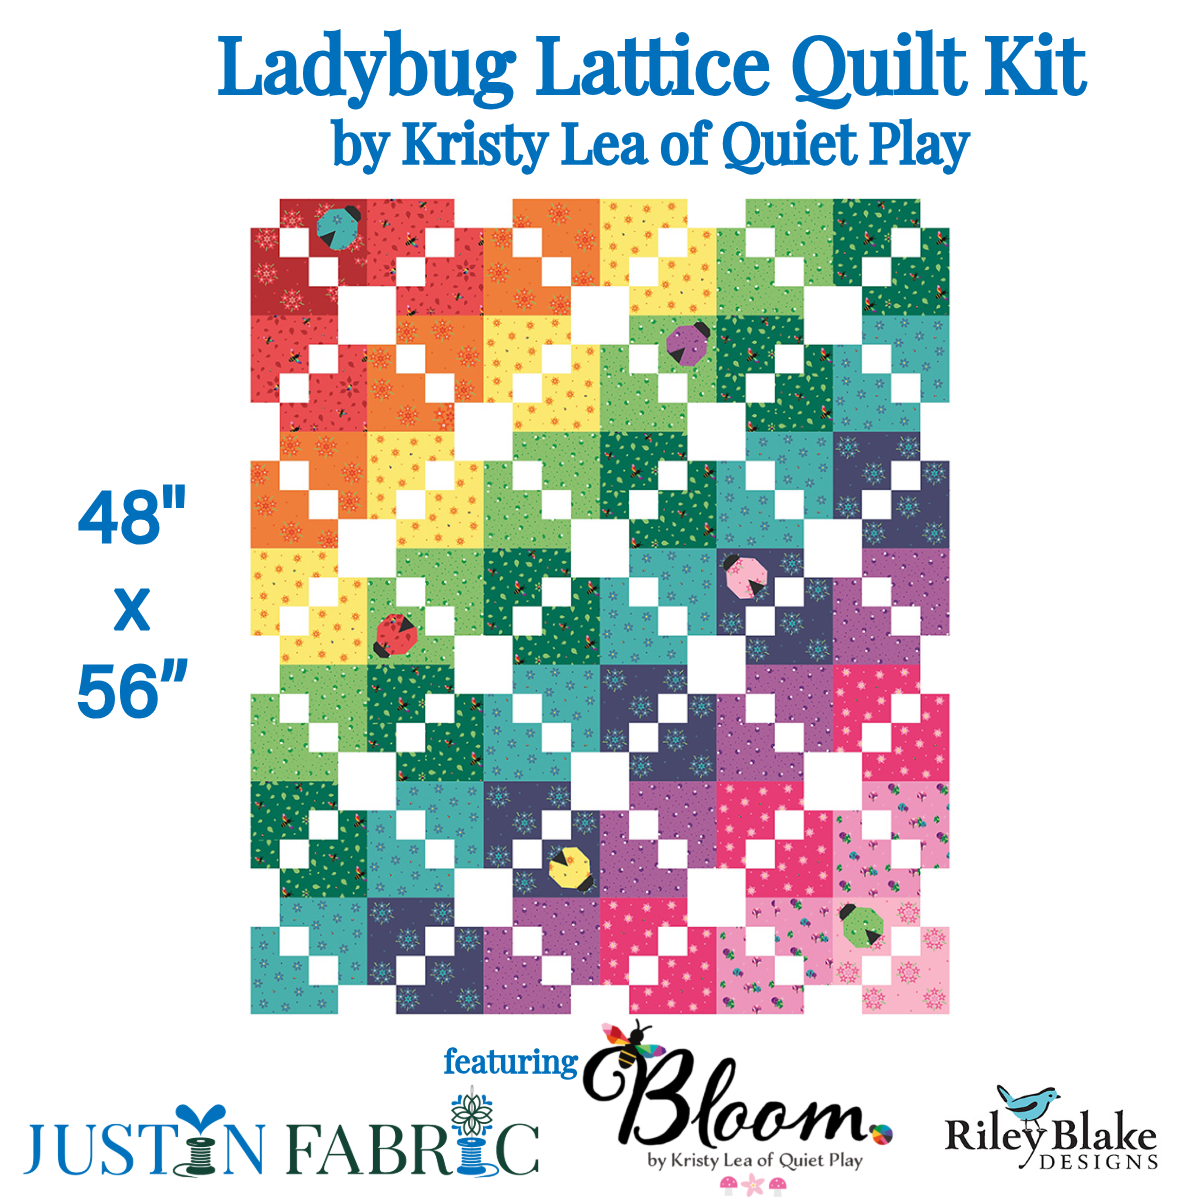 Ladybug Lattice Quilt Kit featuring Bloom from Kristy Lea | Riley Blake Designs